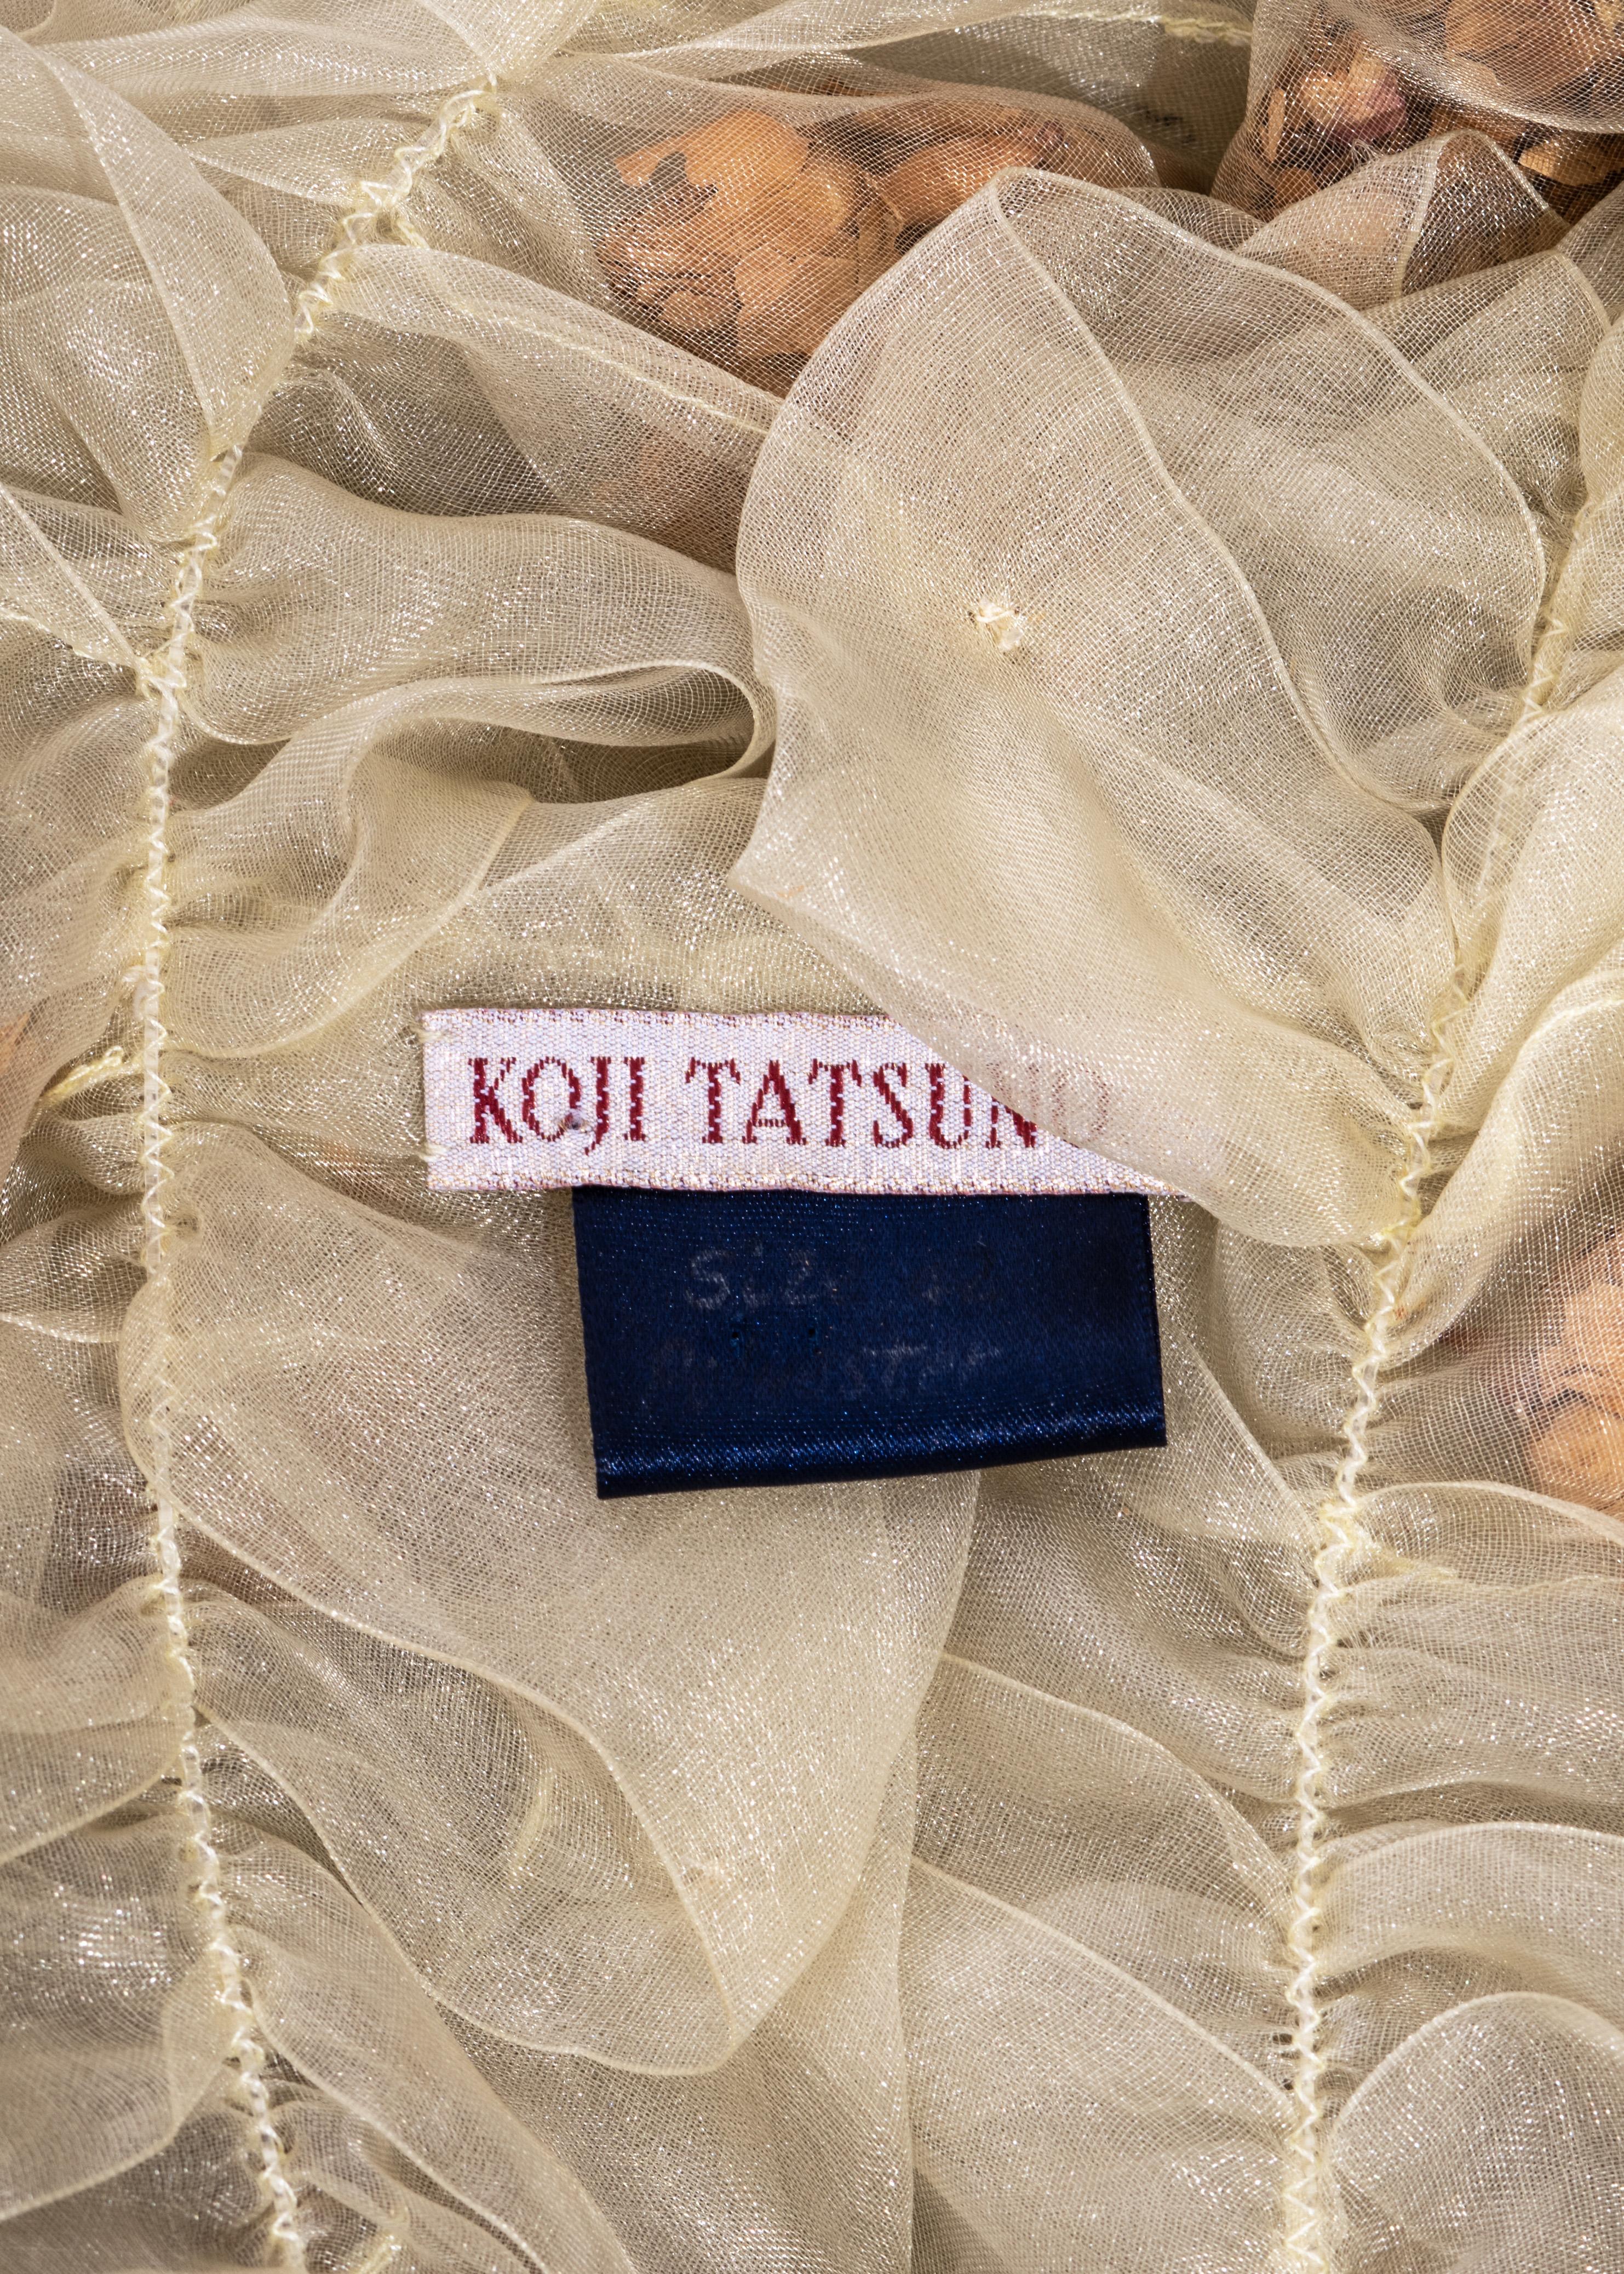 Koji Tatsuno chiffon smocked jacket with incased dried roses, fw 1991 For Sale 2